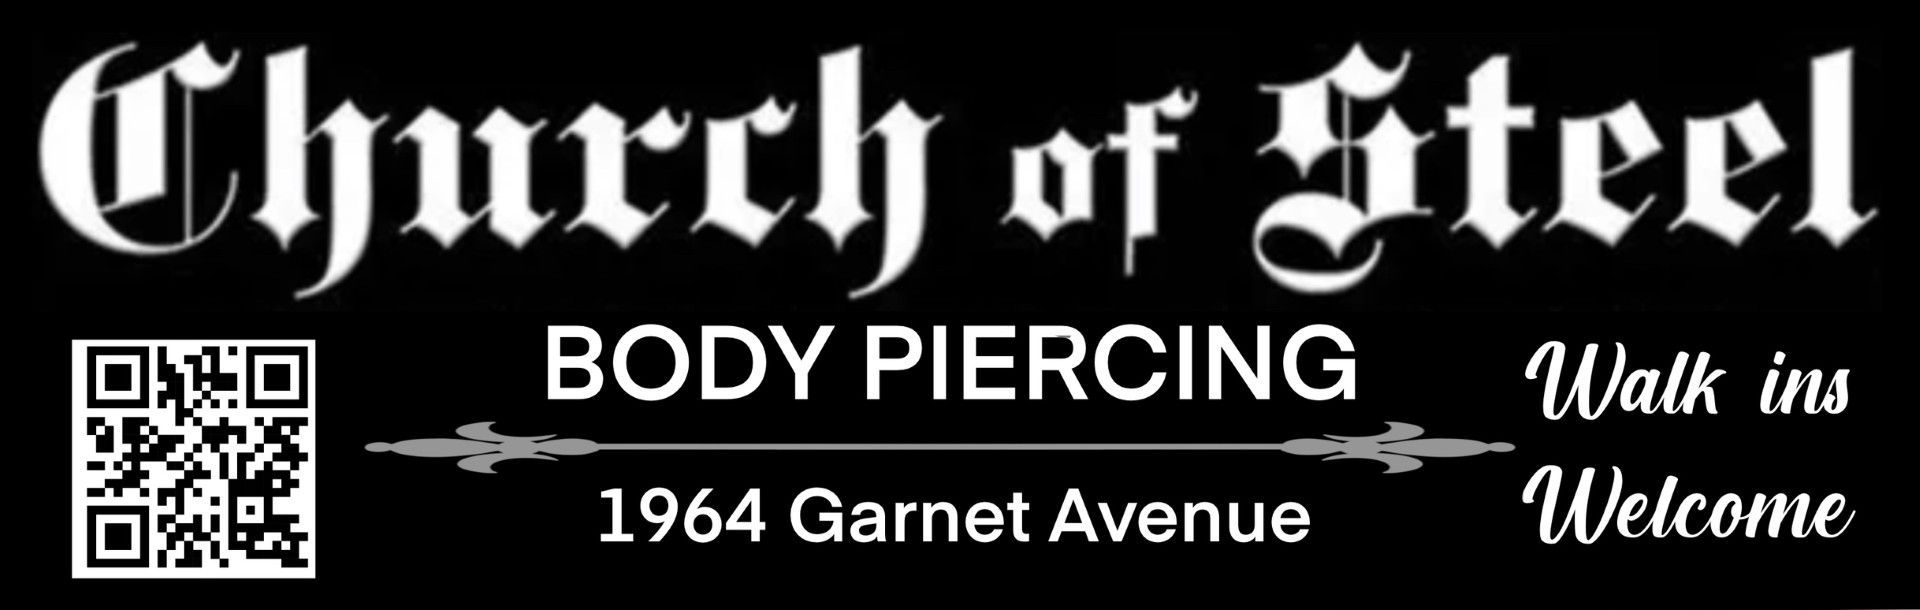 Church Of Steel Body Piercing logo